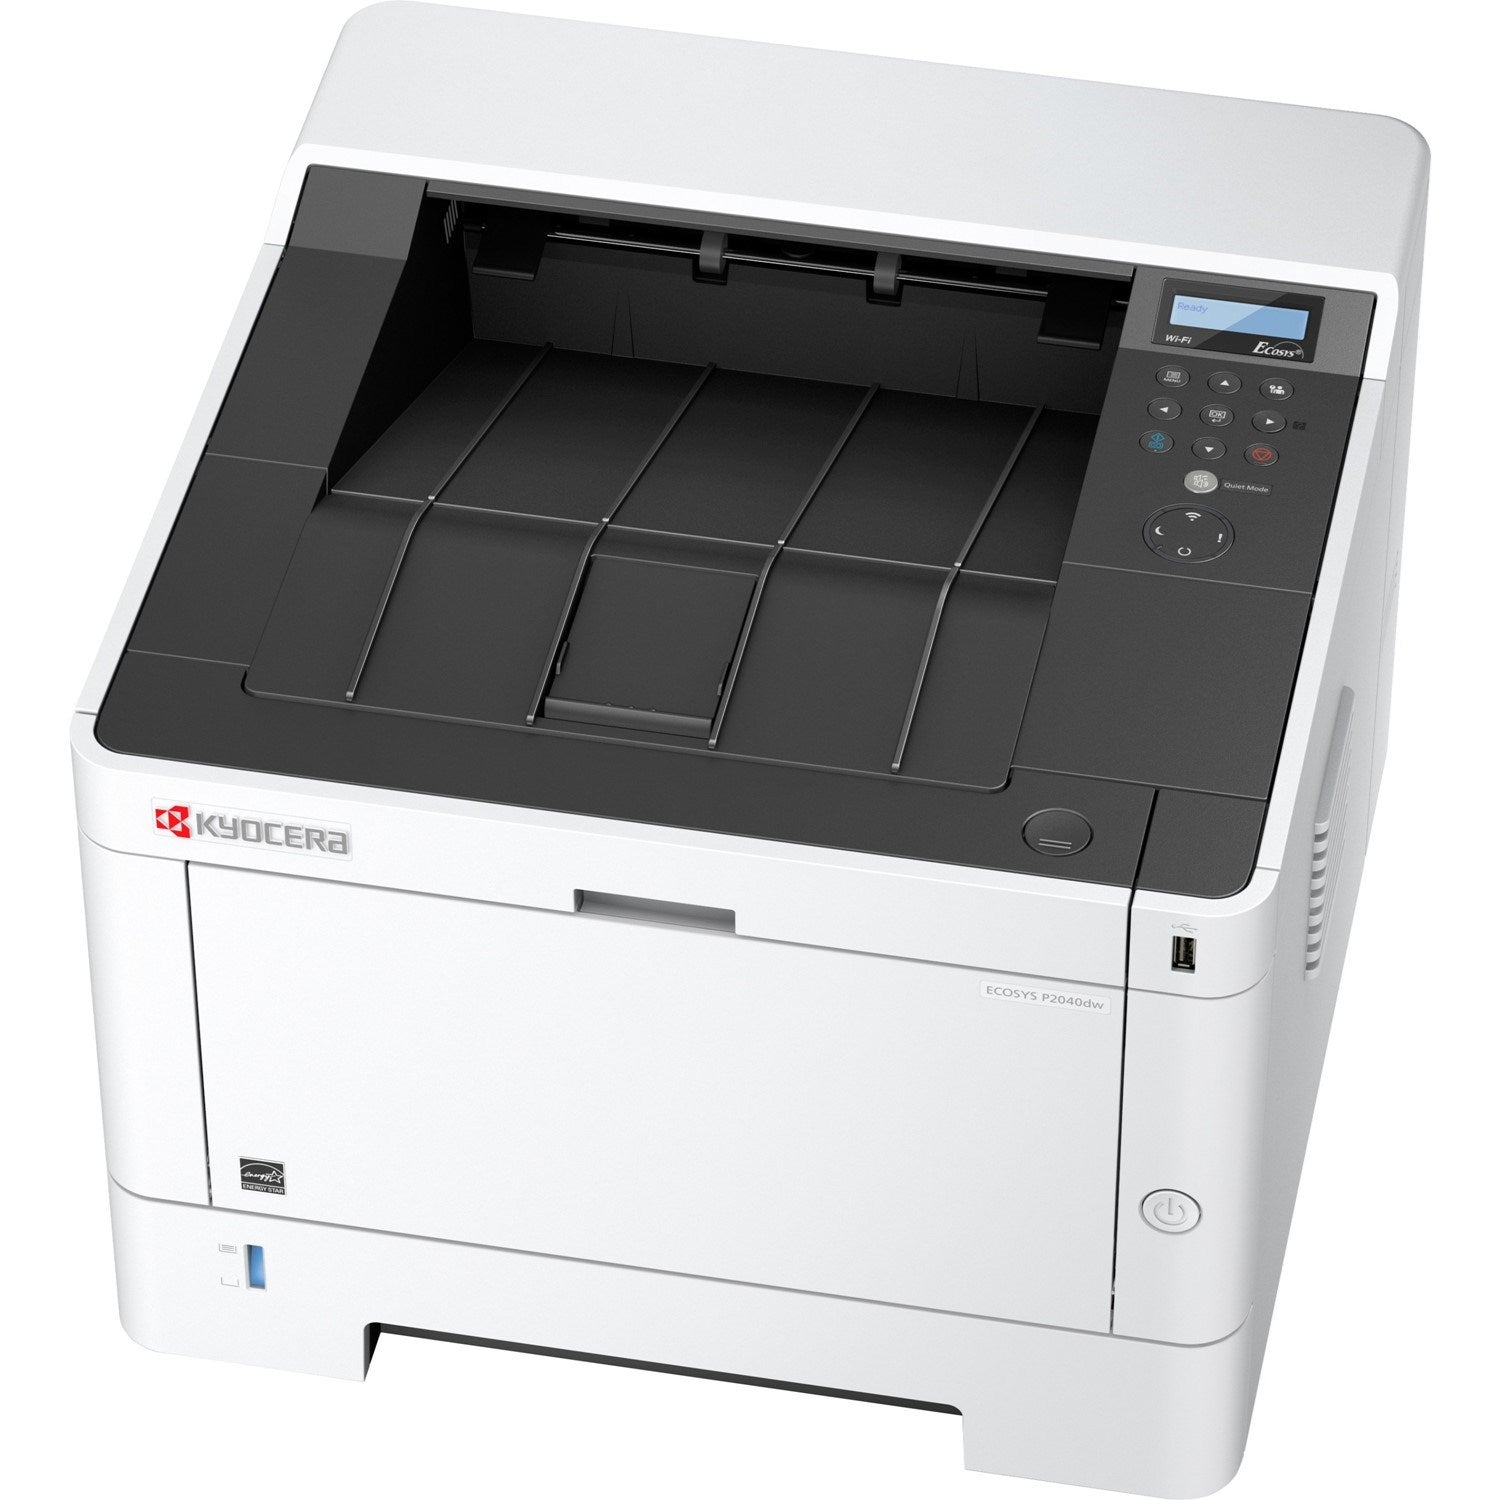 Kyocera P2040dw Mono Laser Printer - The Printer Clinic